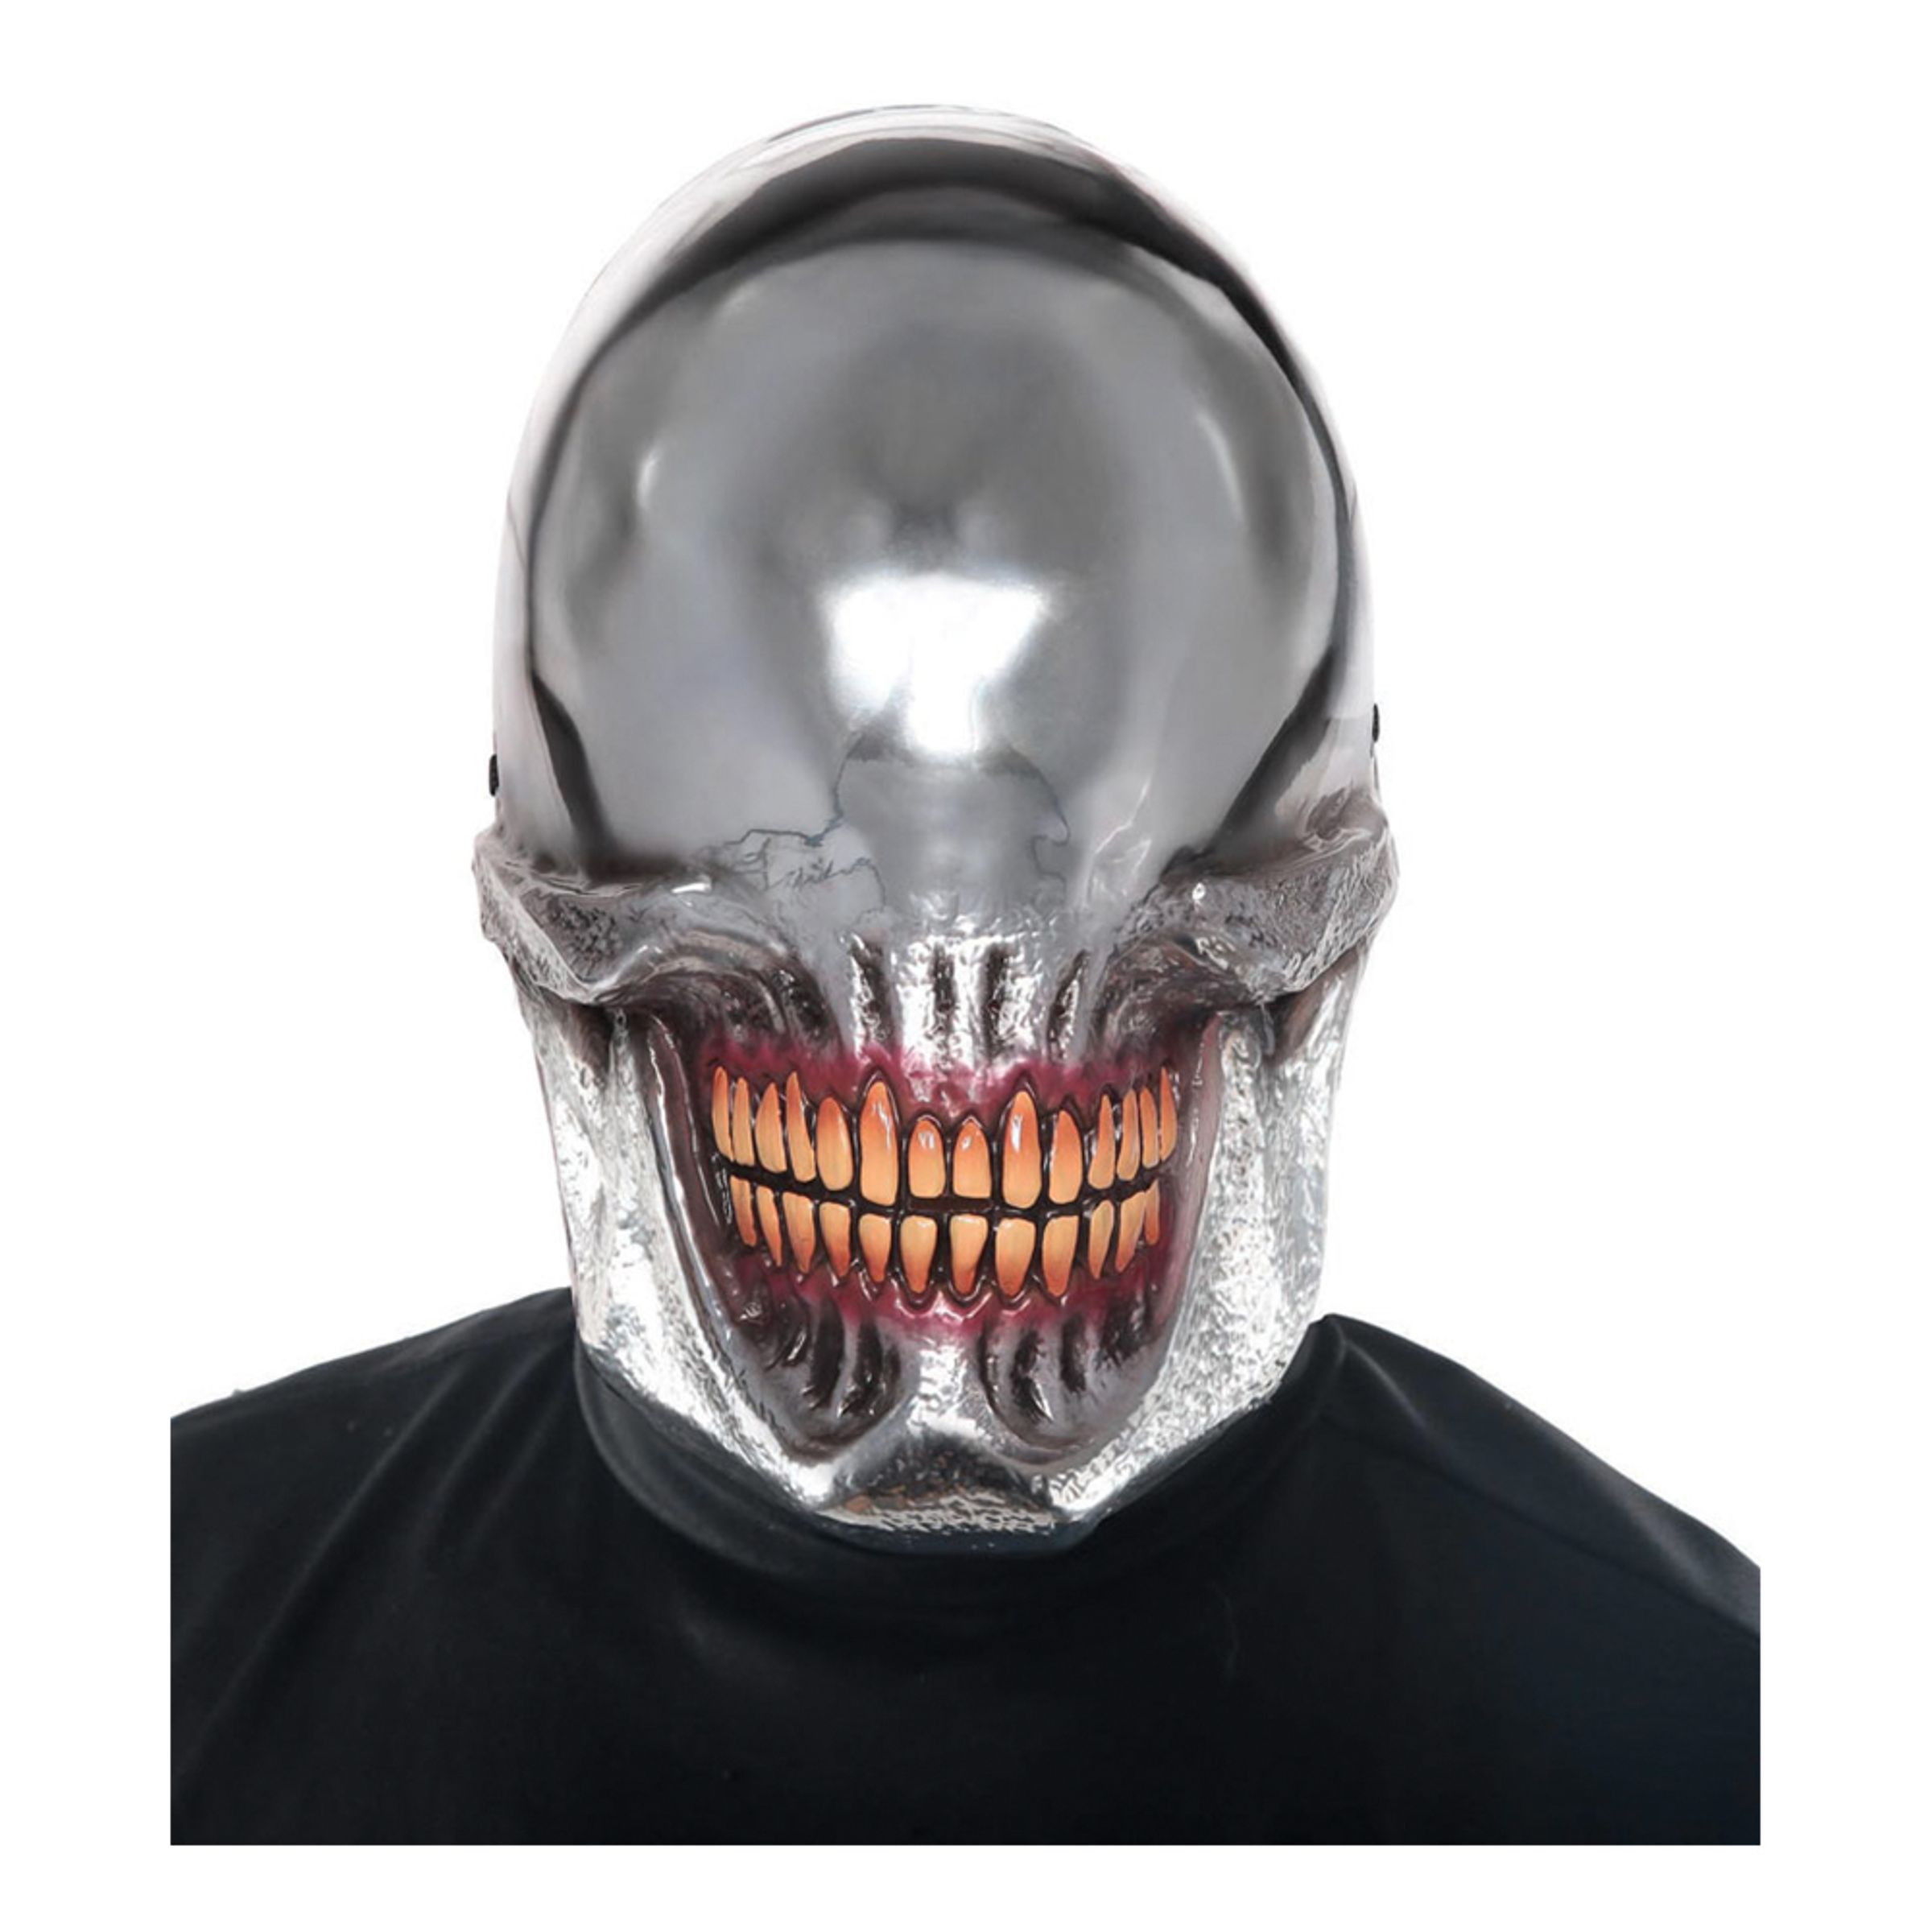 Smile Spegel Mask - One size